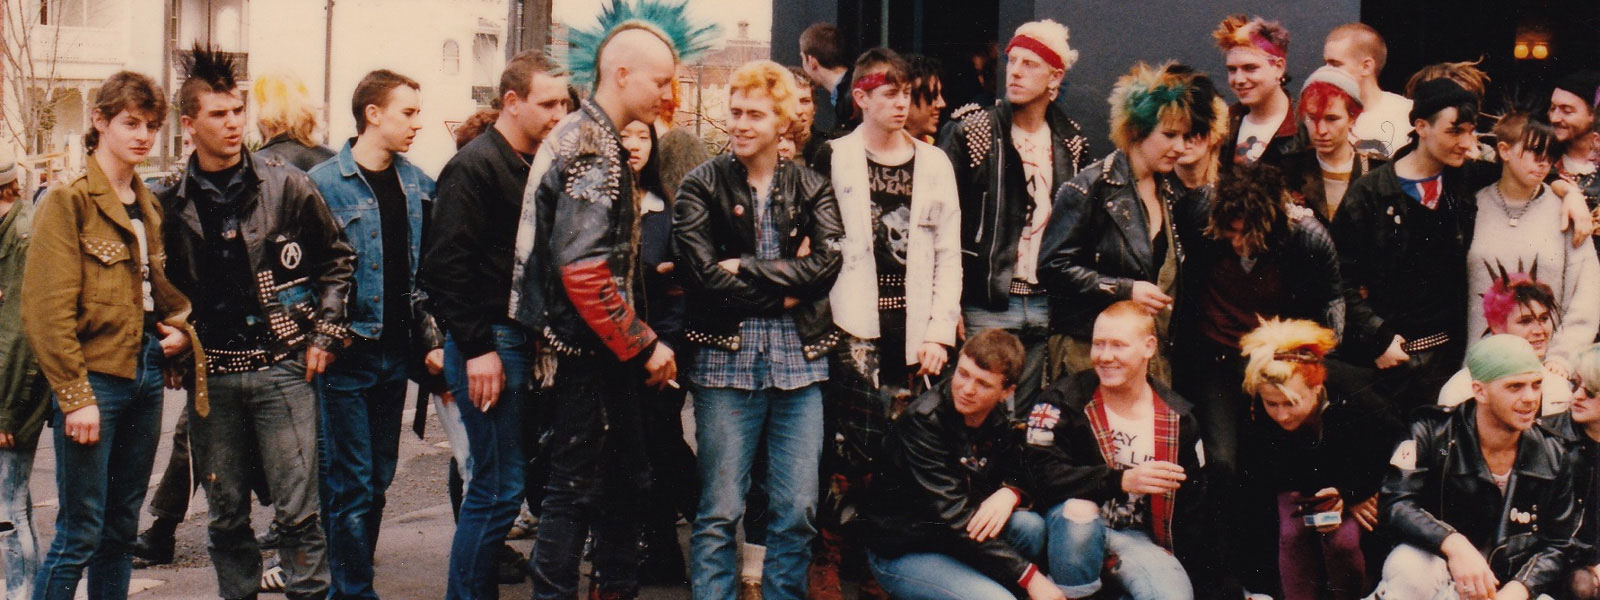 Age of Rage - The Australian Punk Revolution